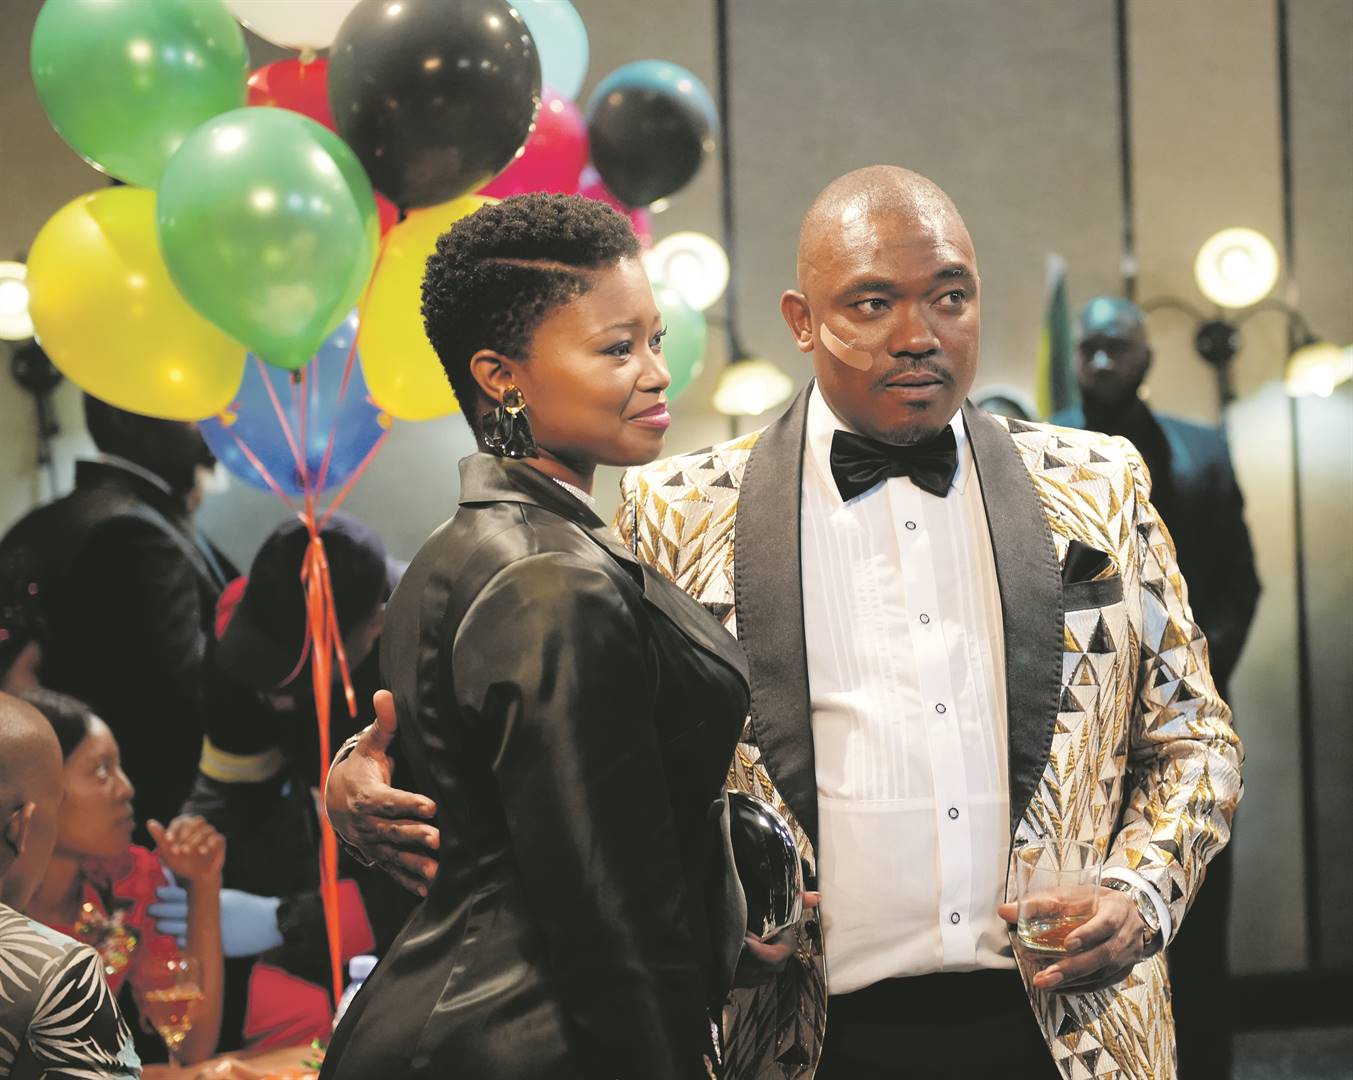 Aubrey Poo (Khumo) and Mpume Nyamane (Nozipho) at Nkaba’s event.